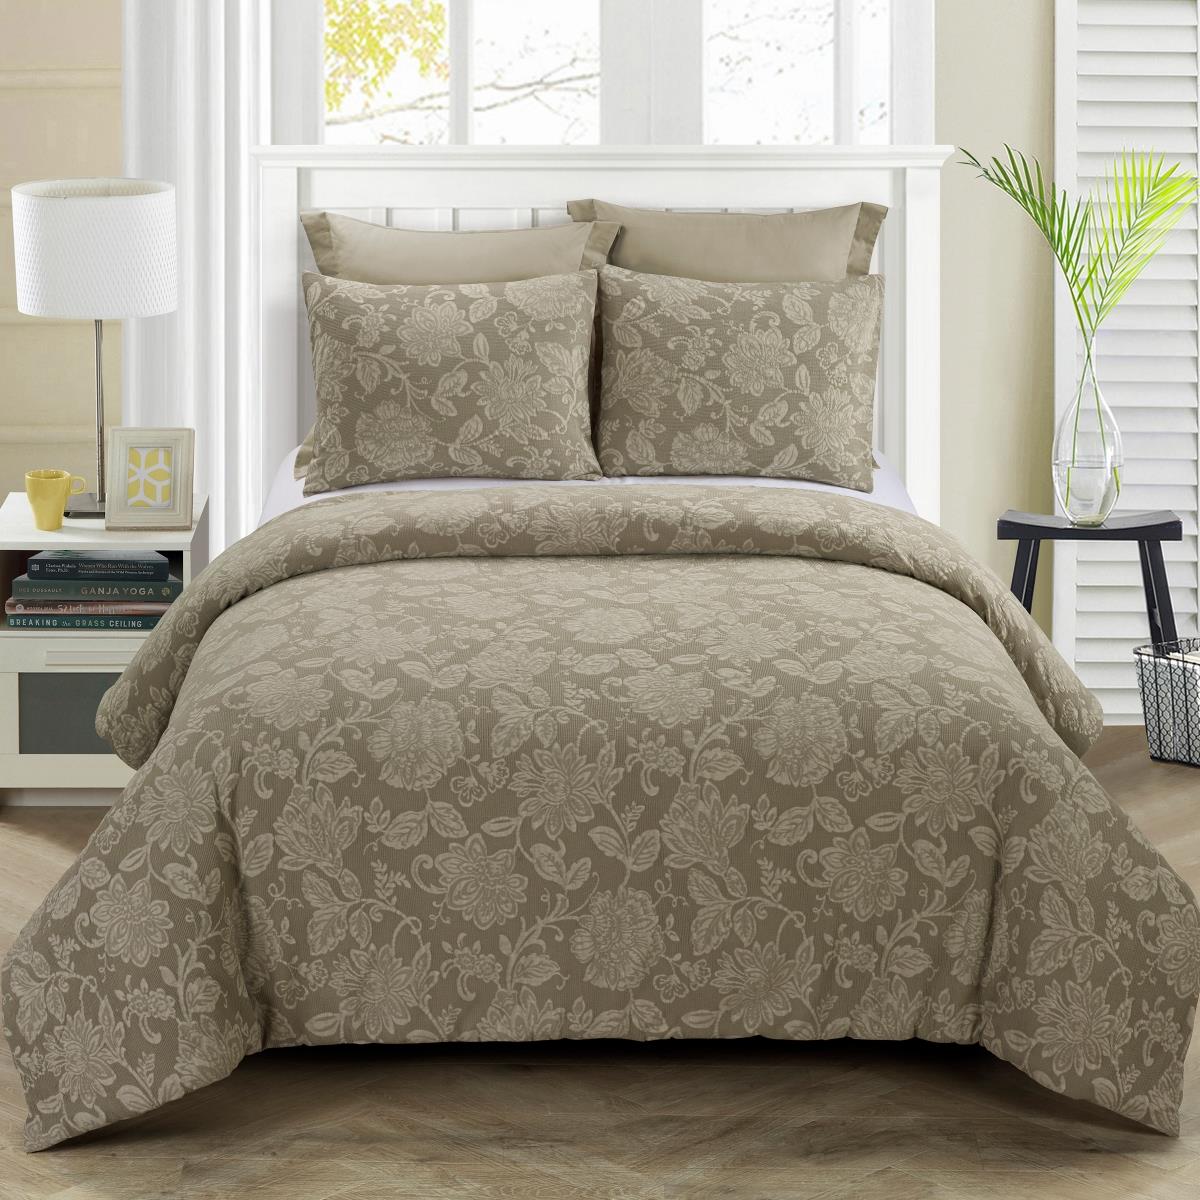 Y00400 Queen Size Comforter Set - Amadora Taupe